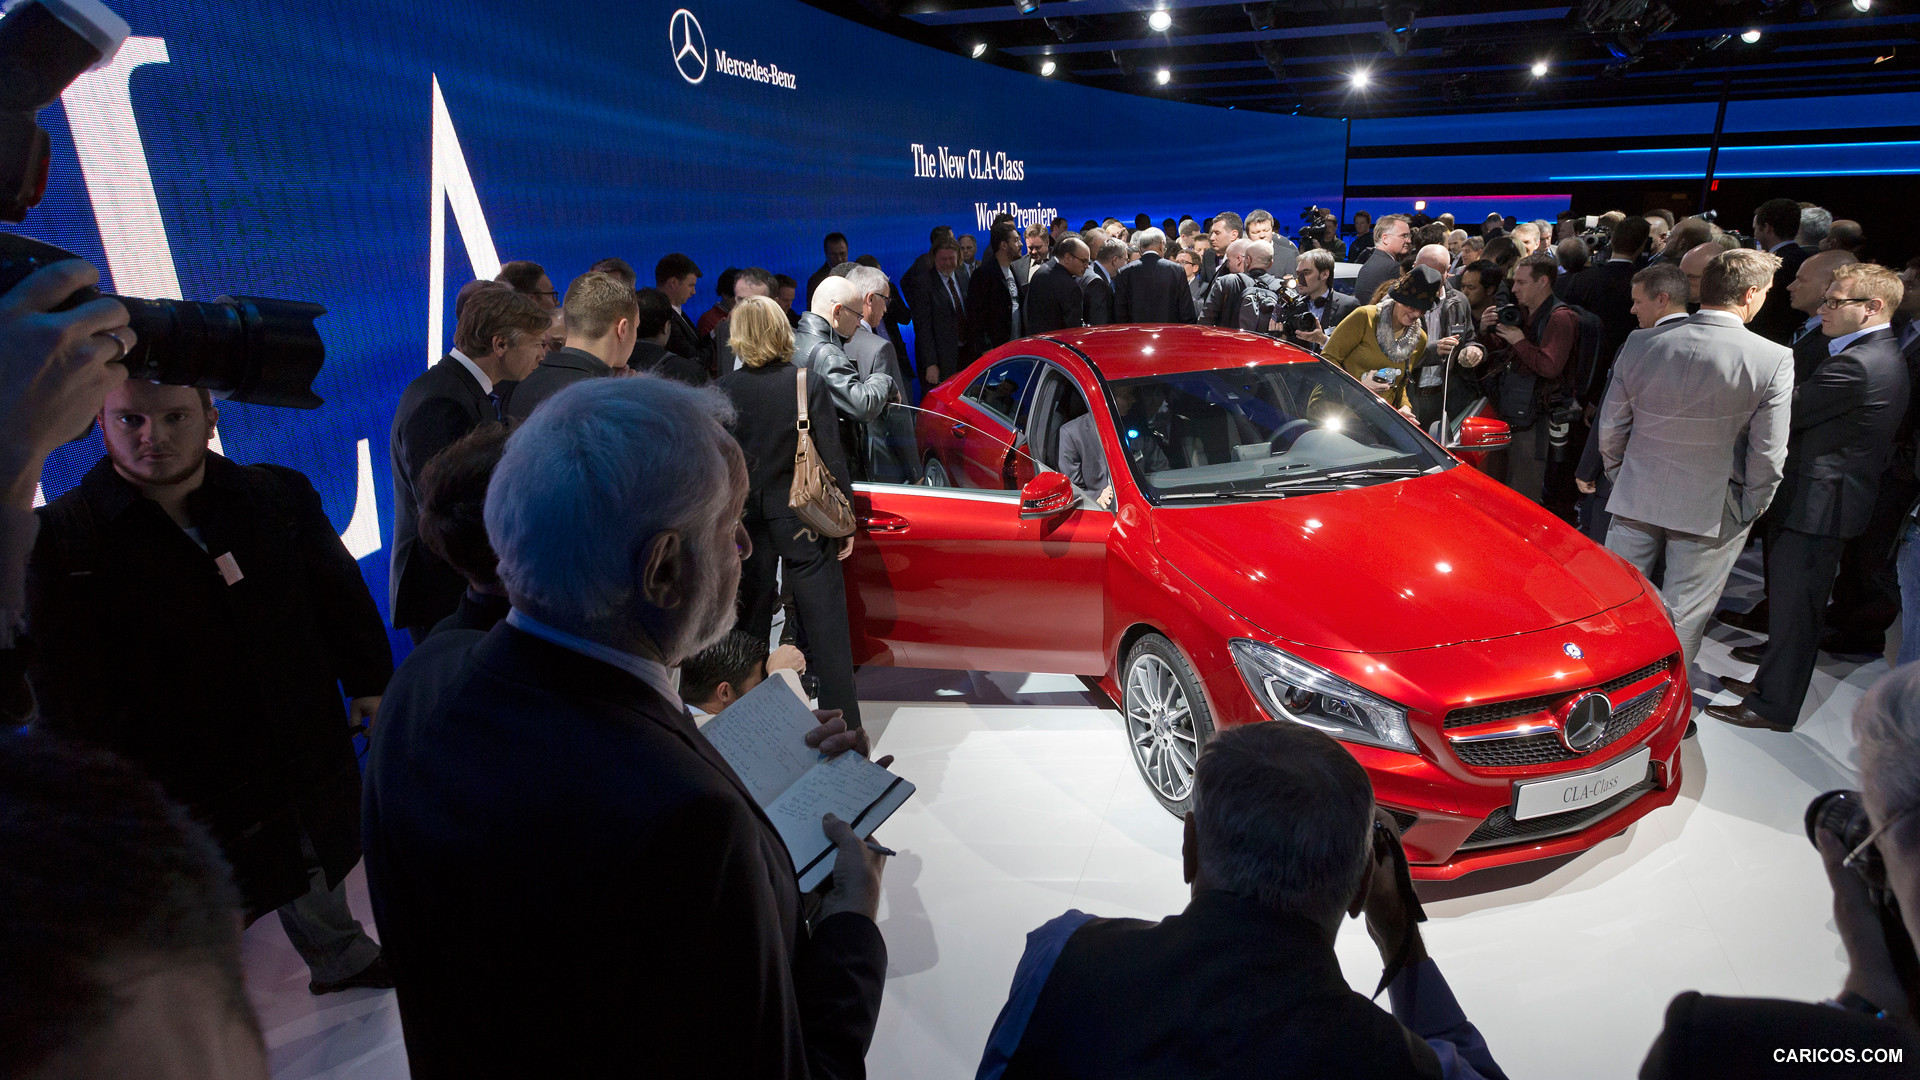 2014 Mercedes-Benz CLA-Class World Premiere - Front, #178 of 183